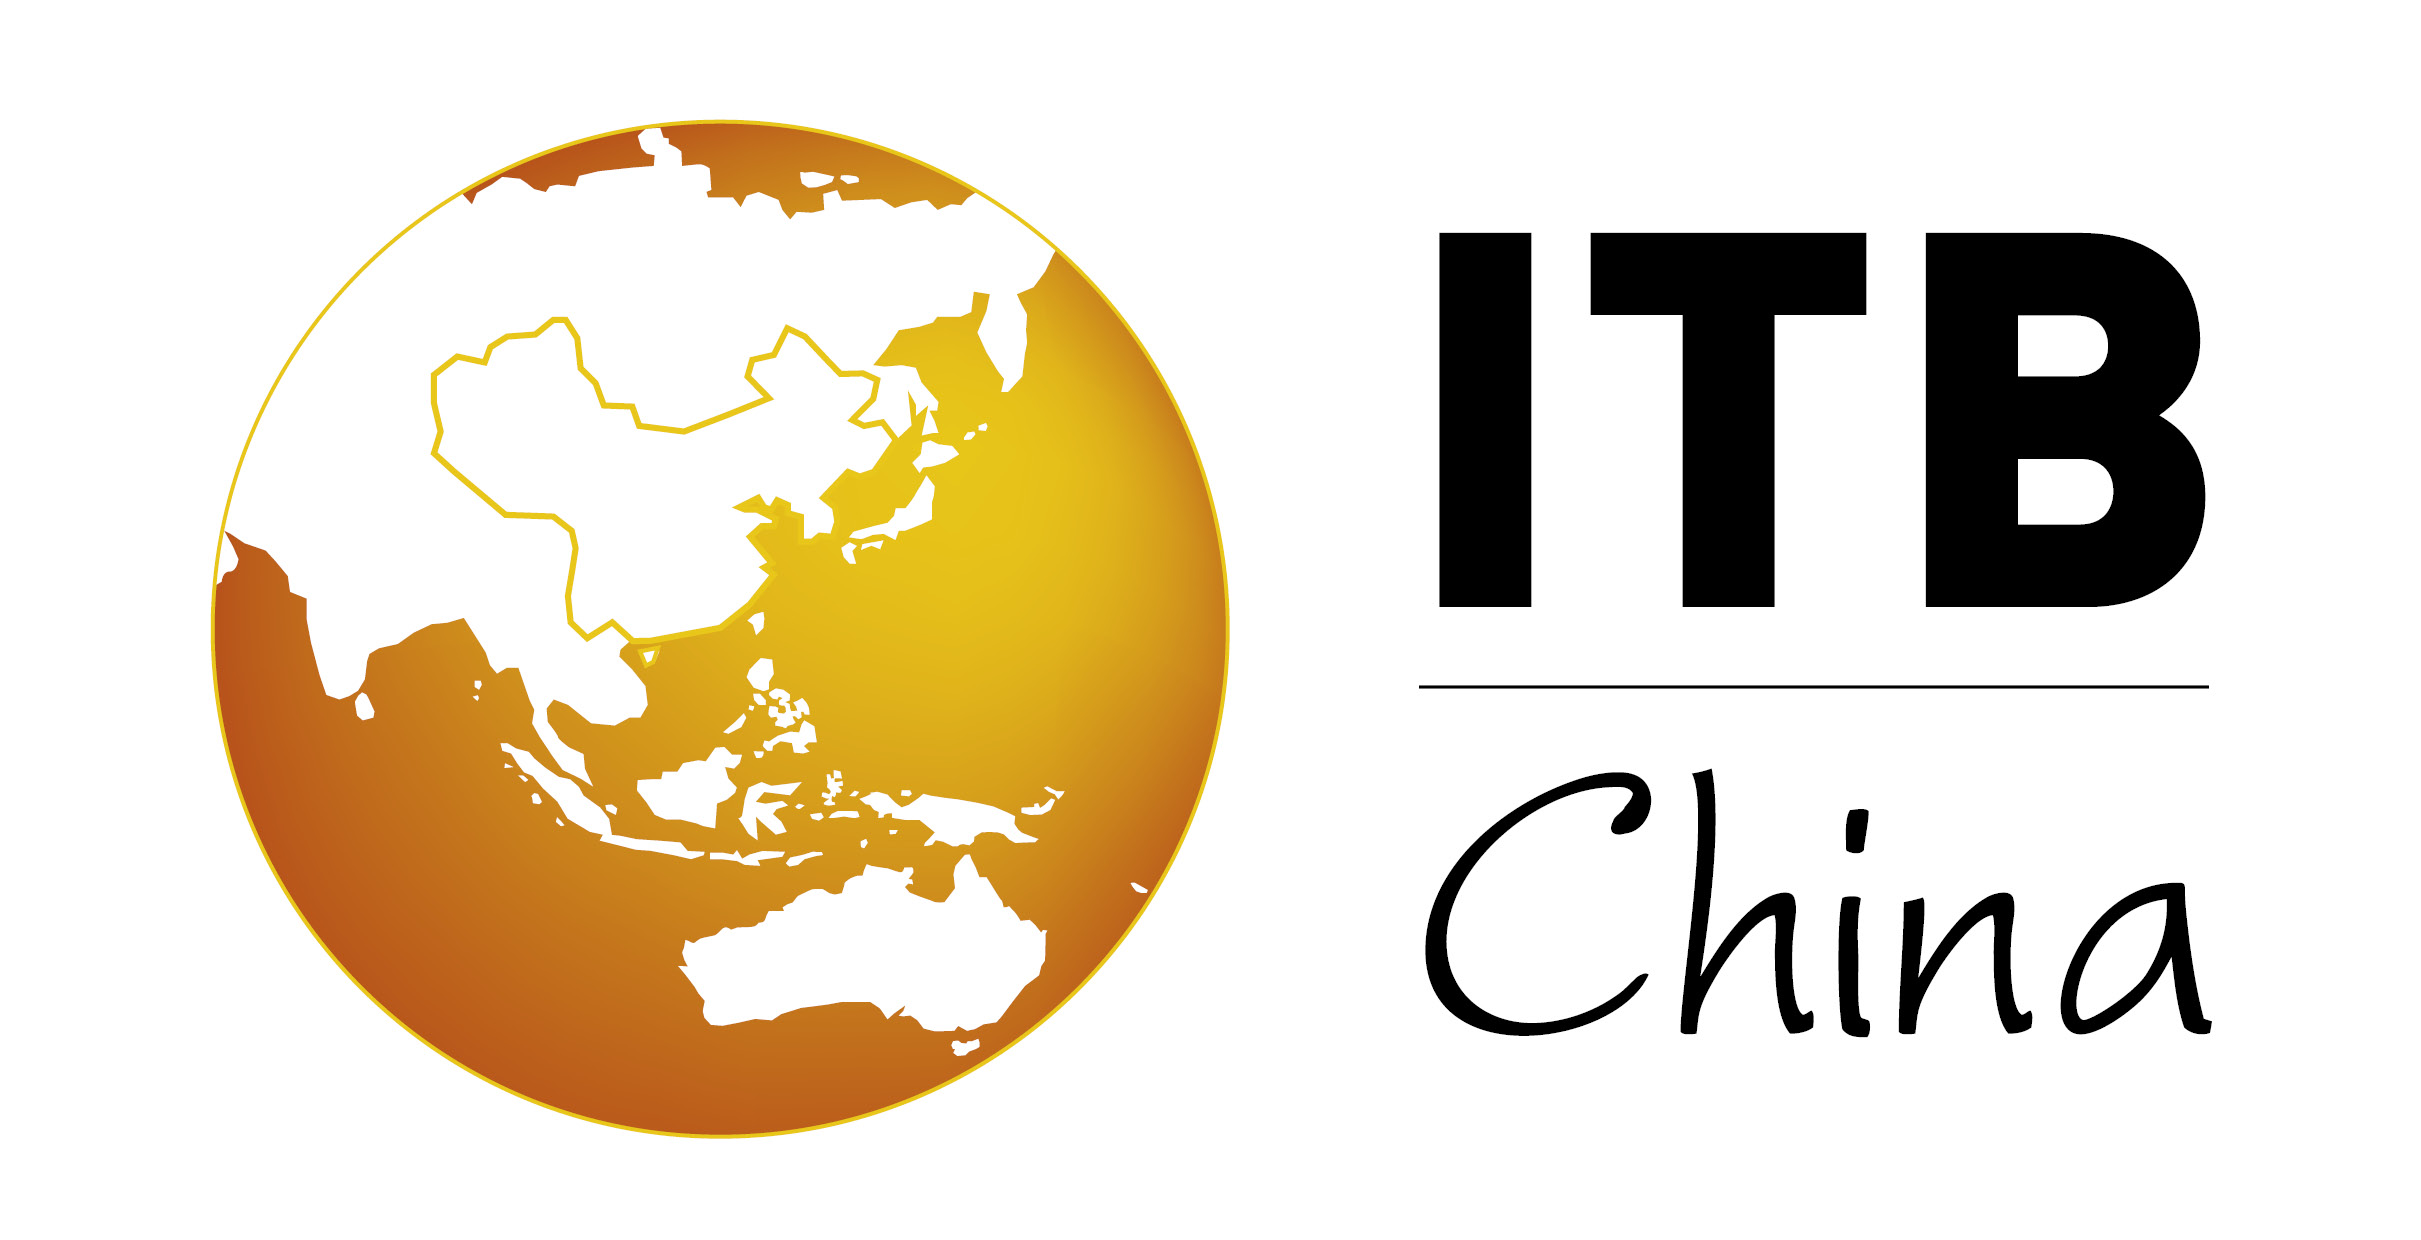 ITB China names Ctrip copresident as keynote speaker Mix Meetings